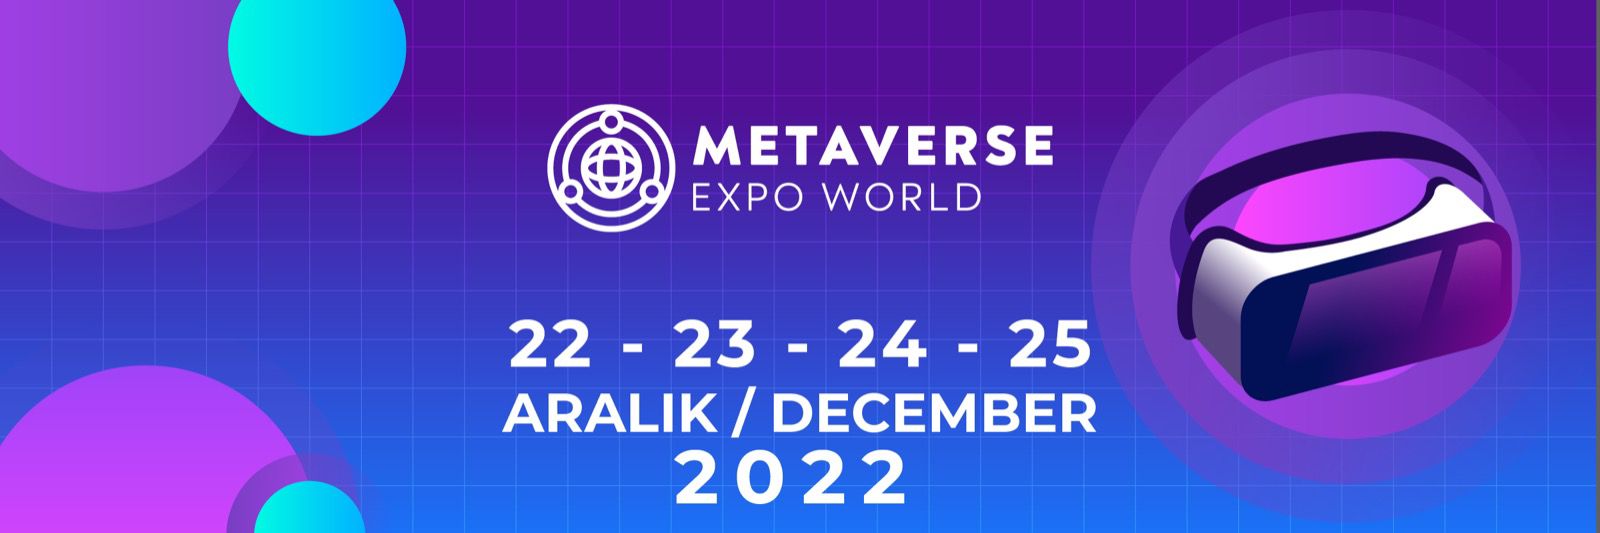 Metaverse Expo World - 2022